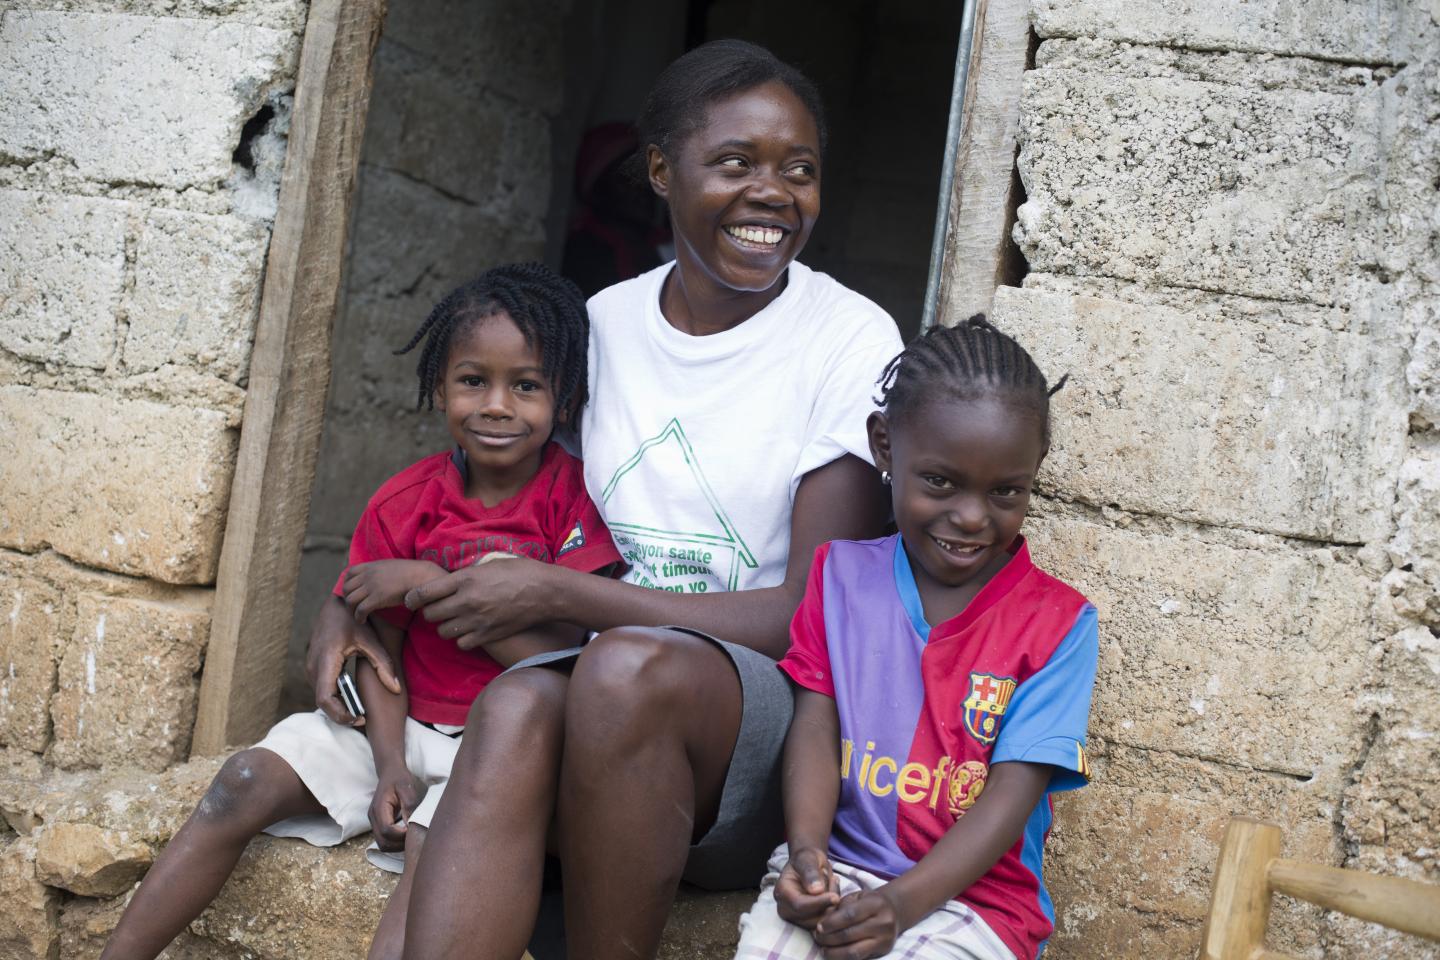 Ketcia, a Community Health Worker, during a PEPFAR-sponsored Home Health Care Visit in Haiti